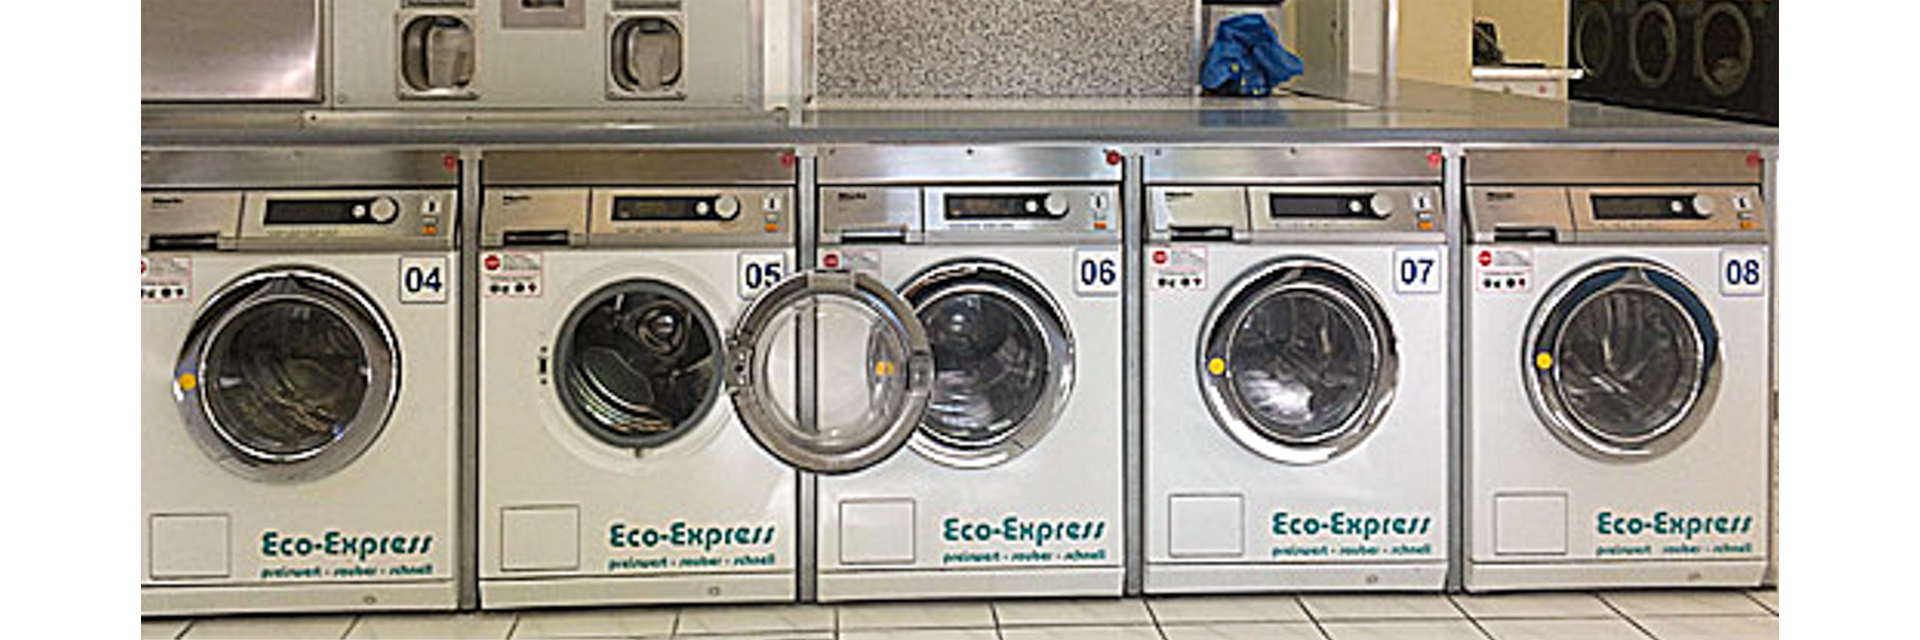 lavanderias automáticas na europa